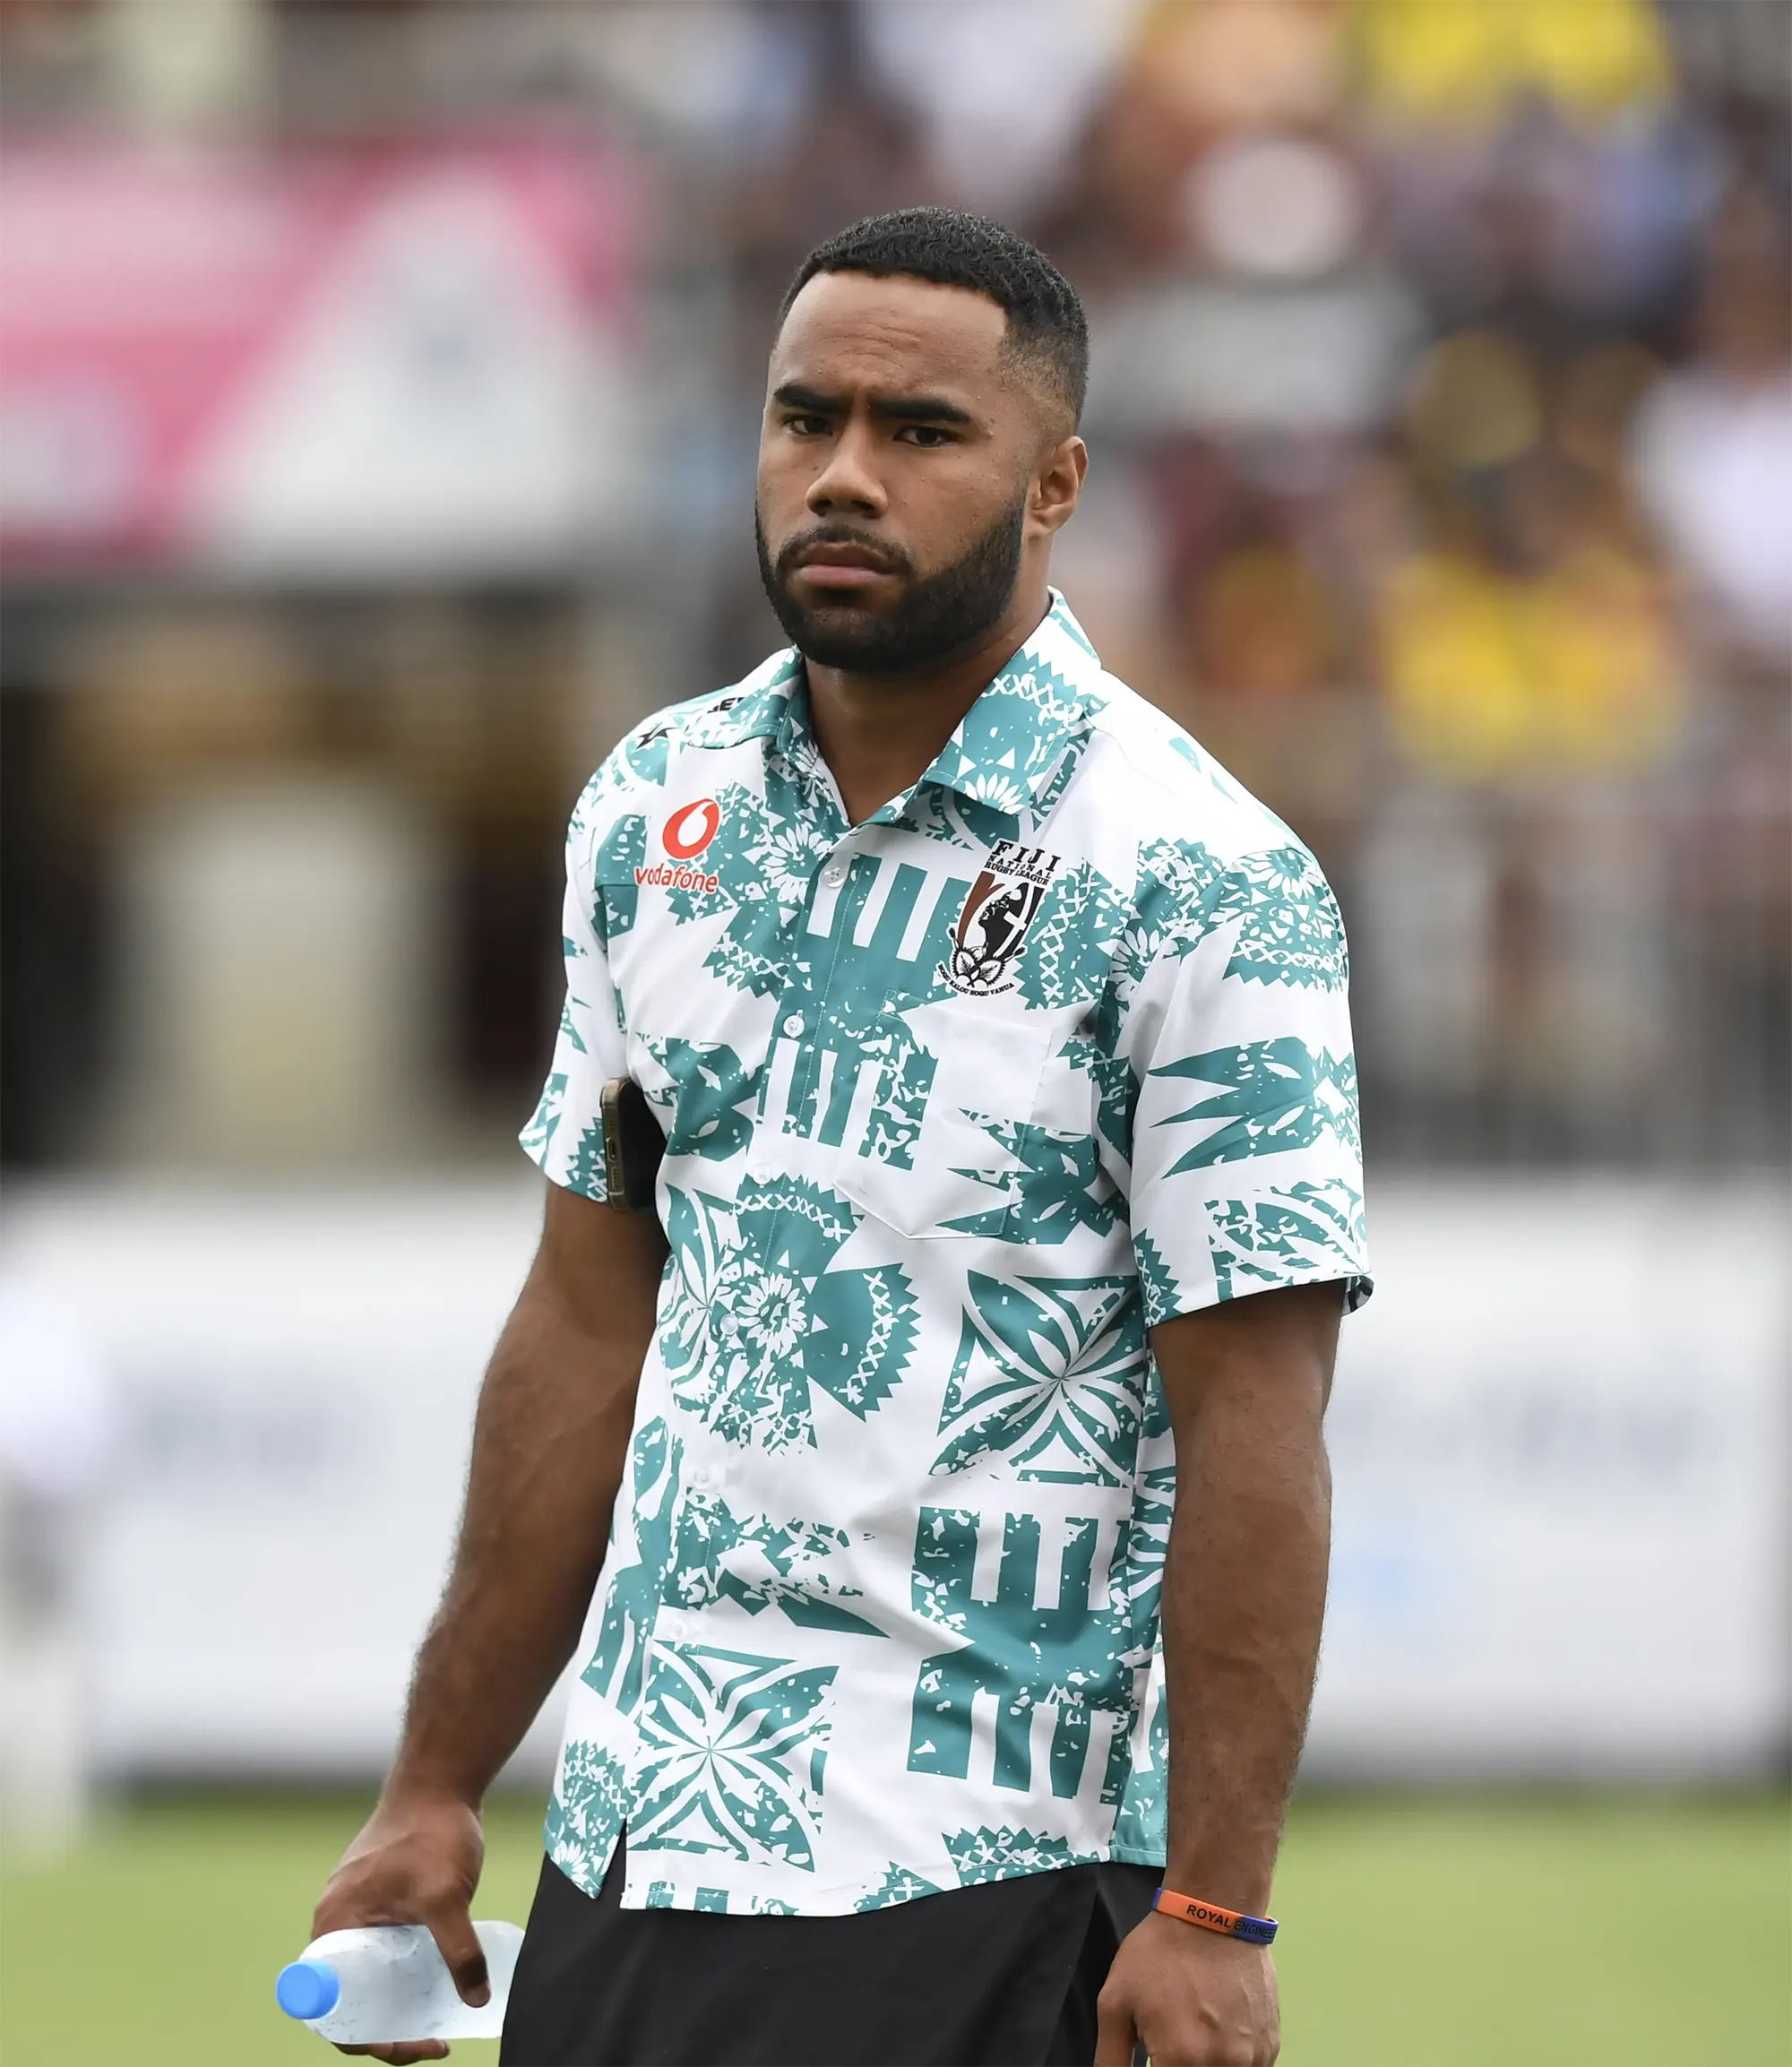 Fiji Bati Player wearing custom button up shirt with Fiji Bati branding.